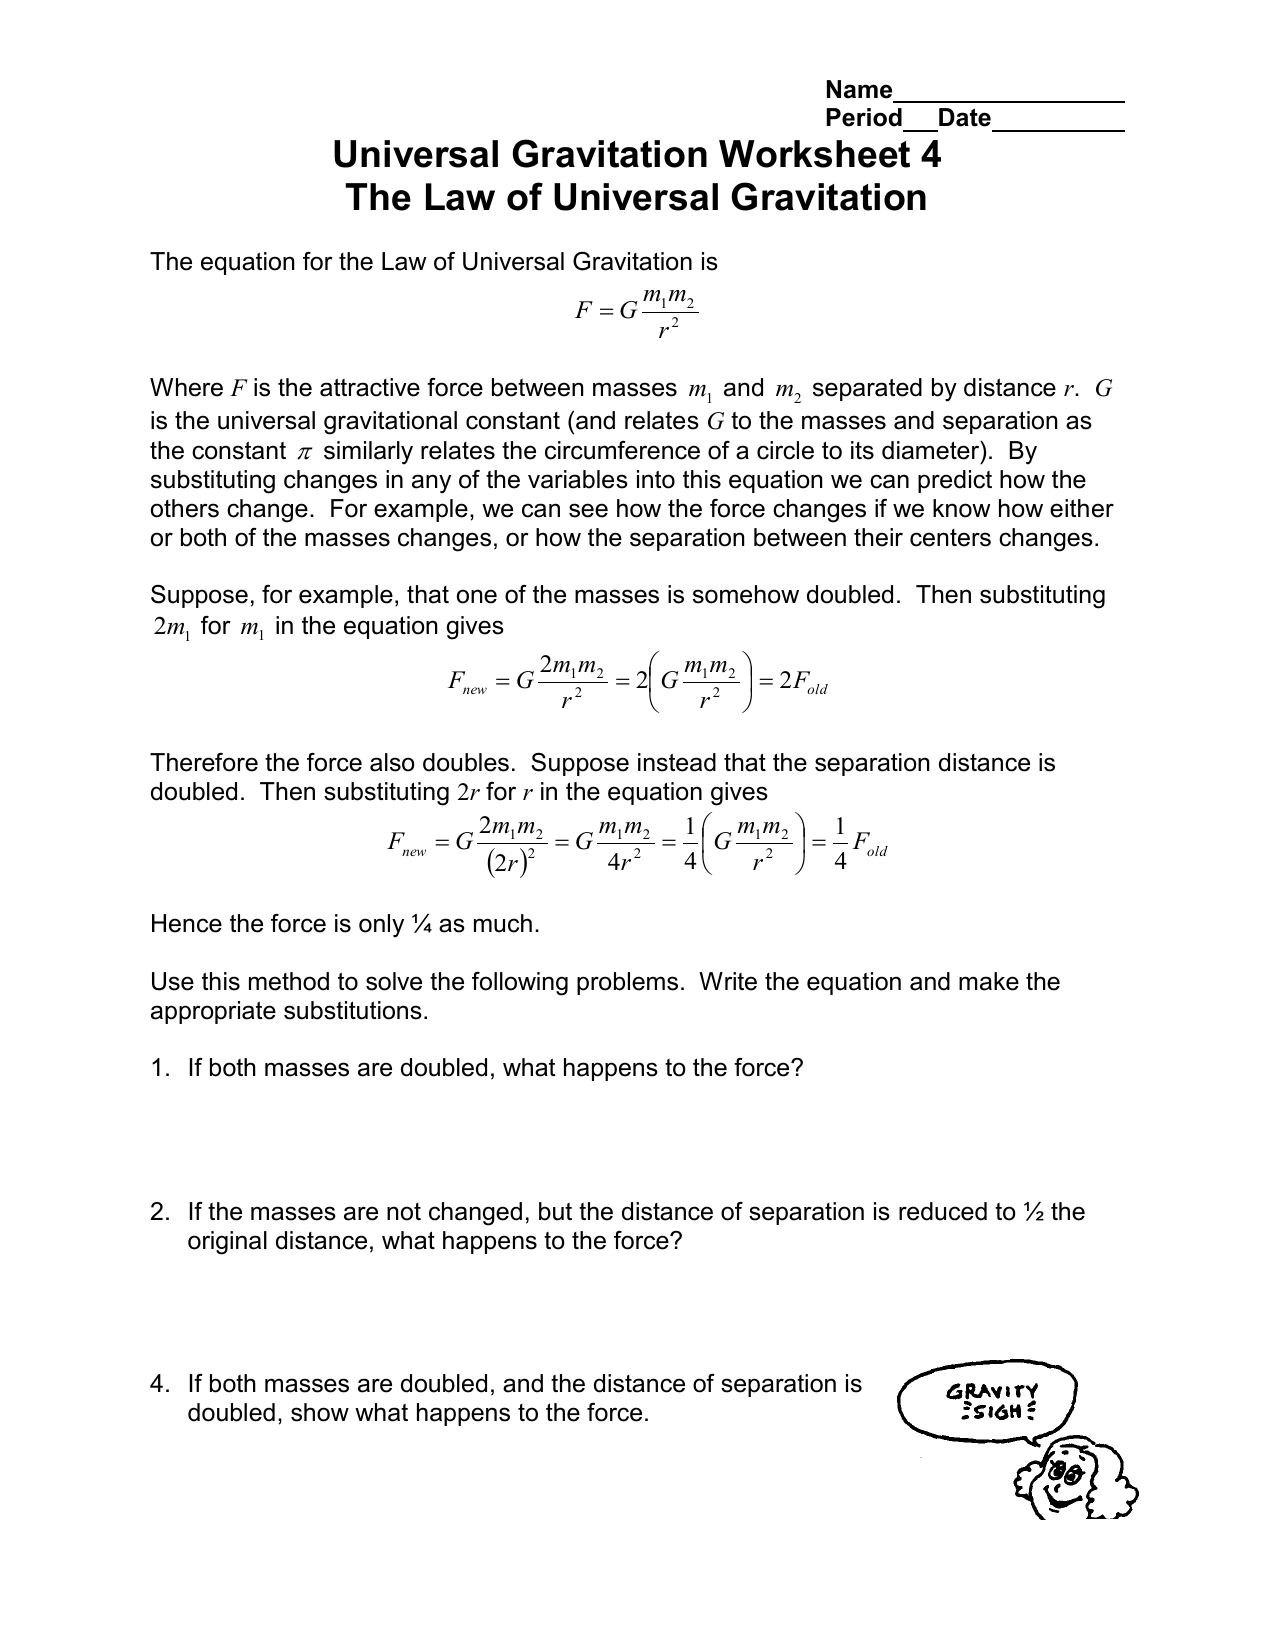 Universal Gravitation Worksheet Physics Answers